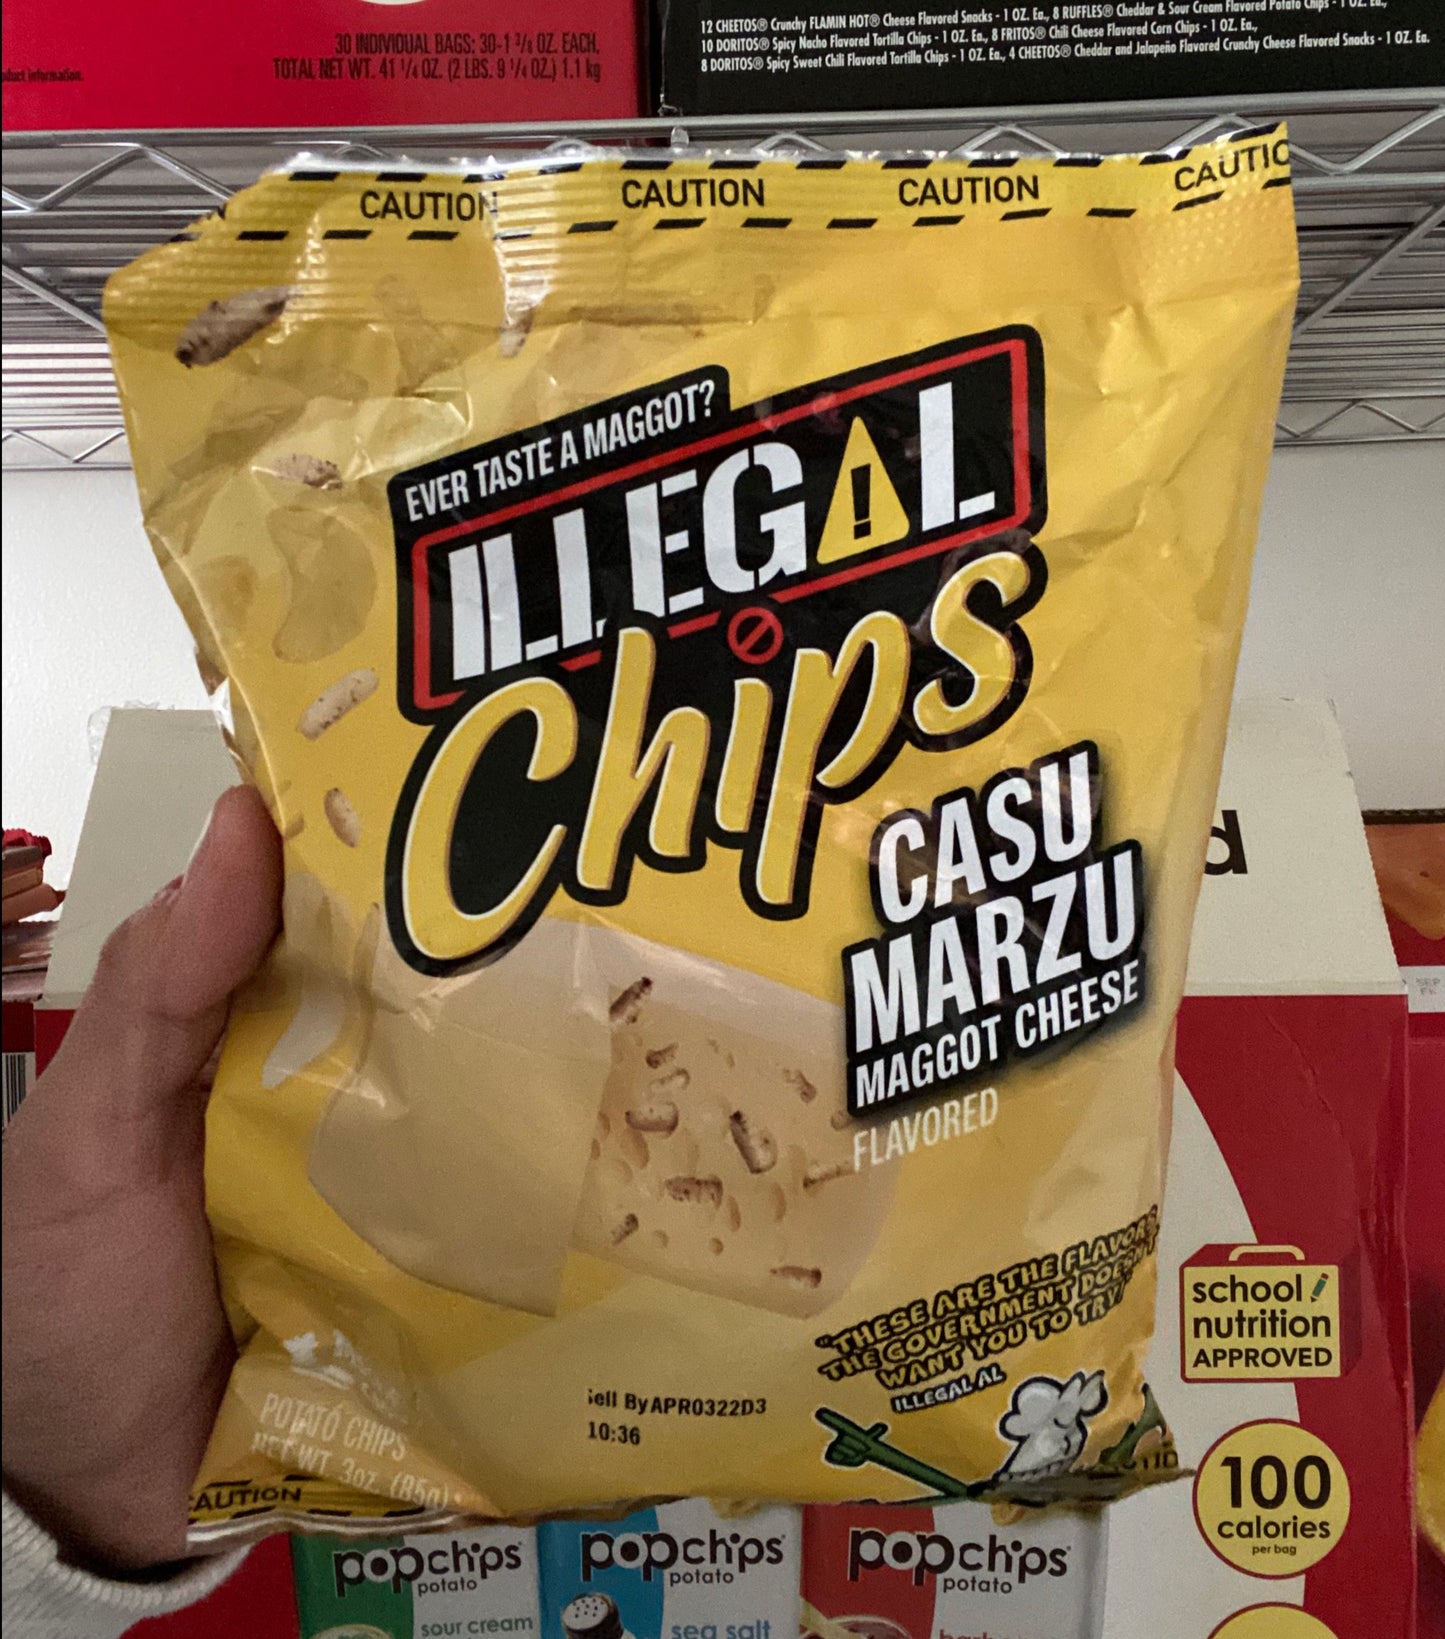 Illegal Chips Casu Marzu Maggot Cheese